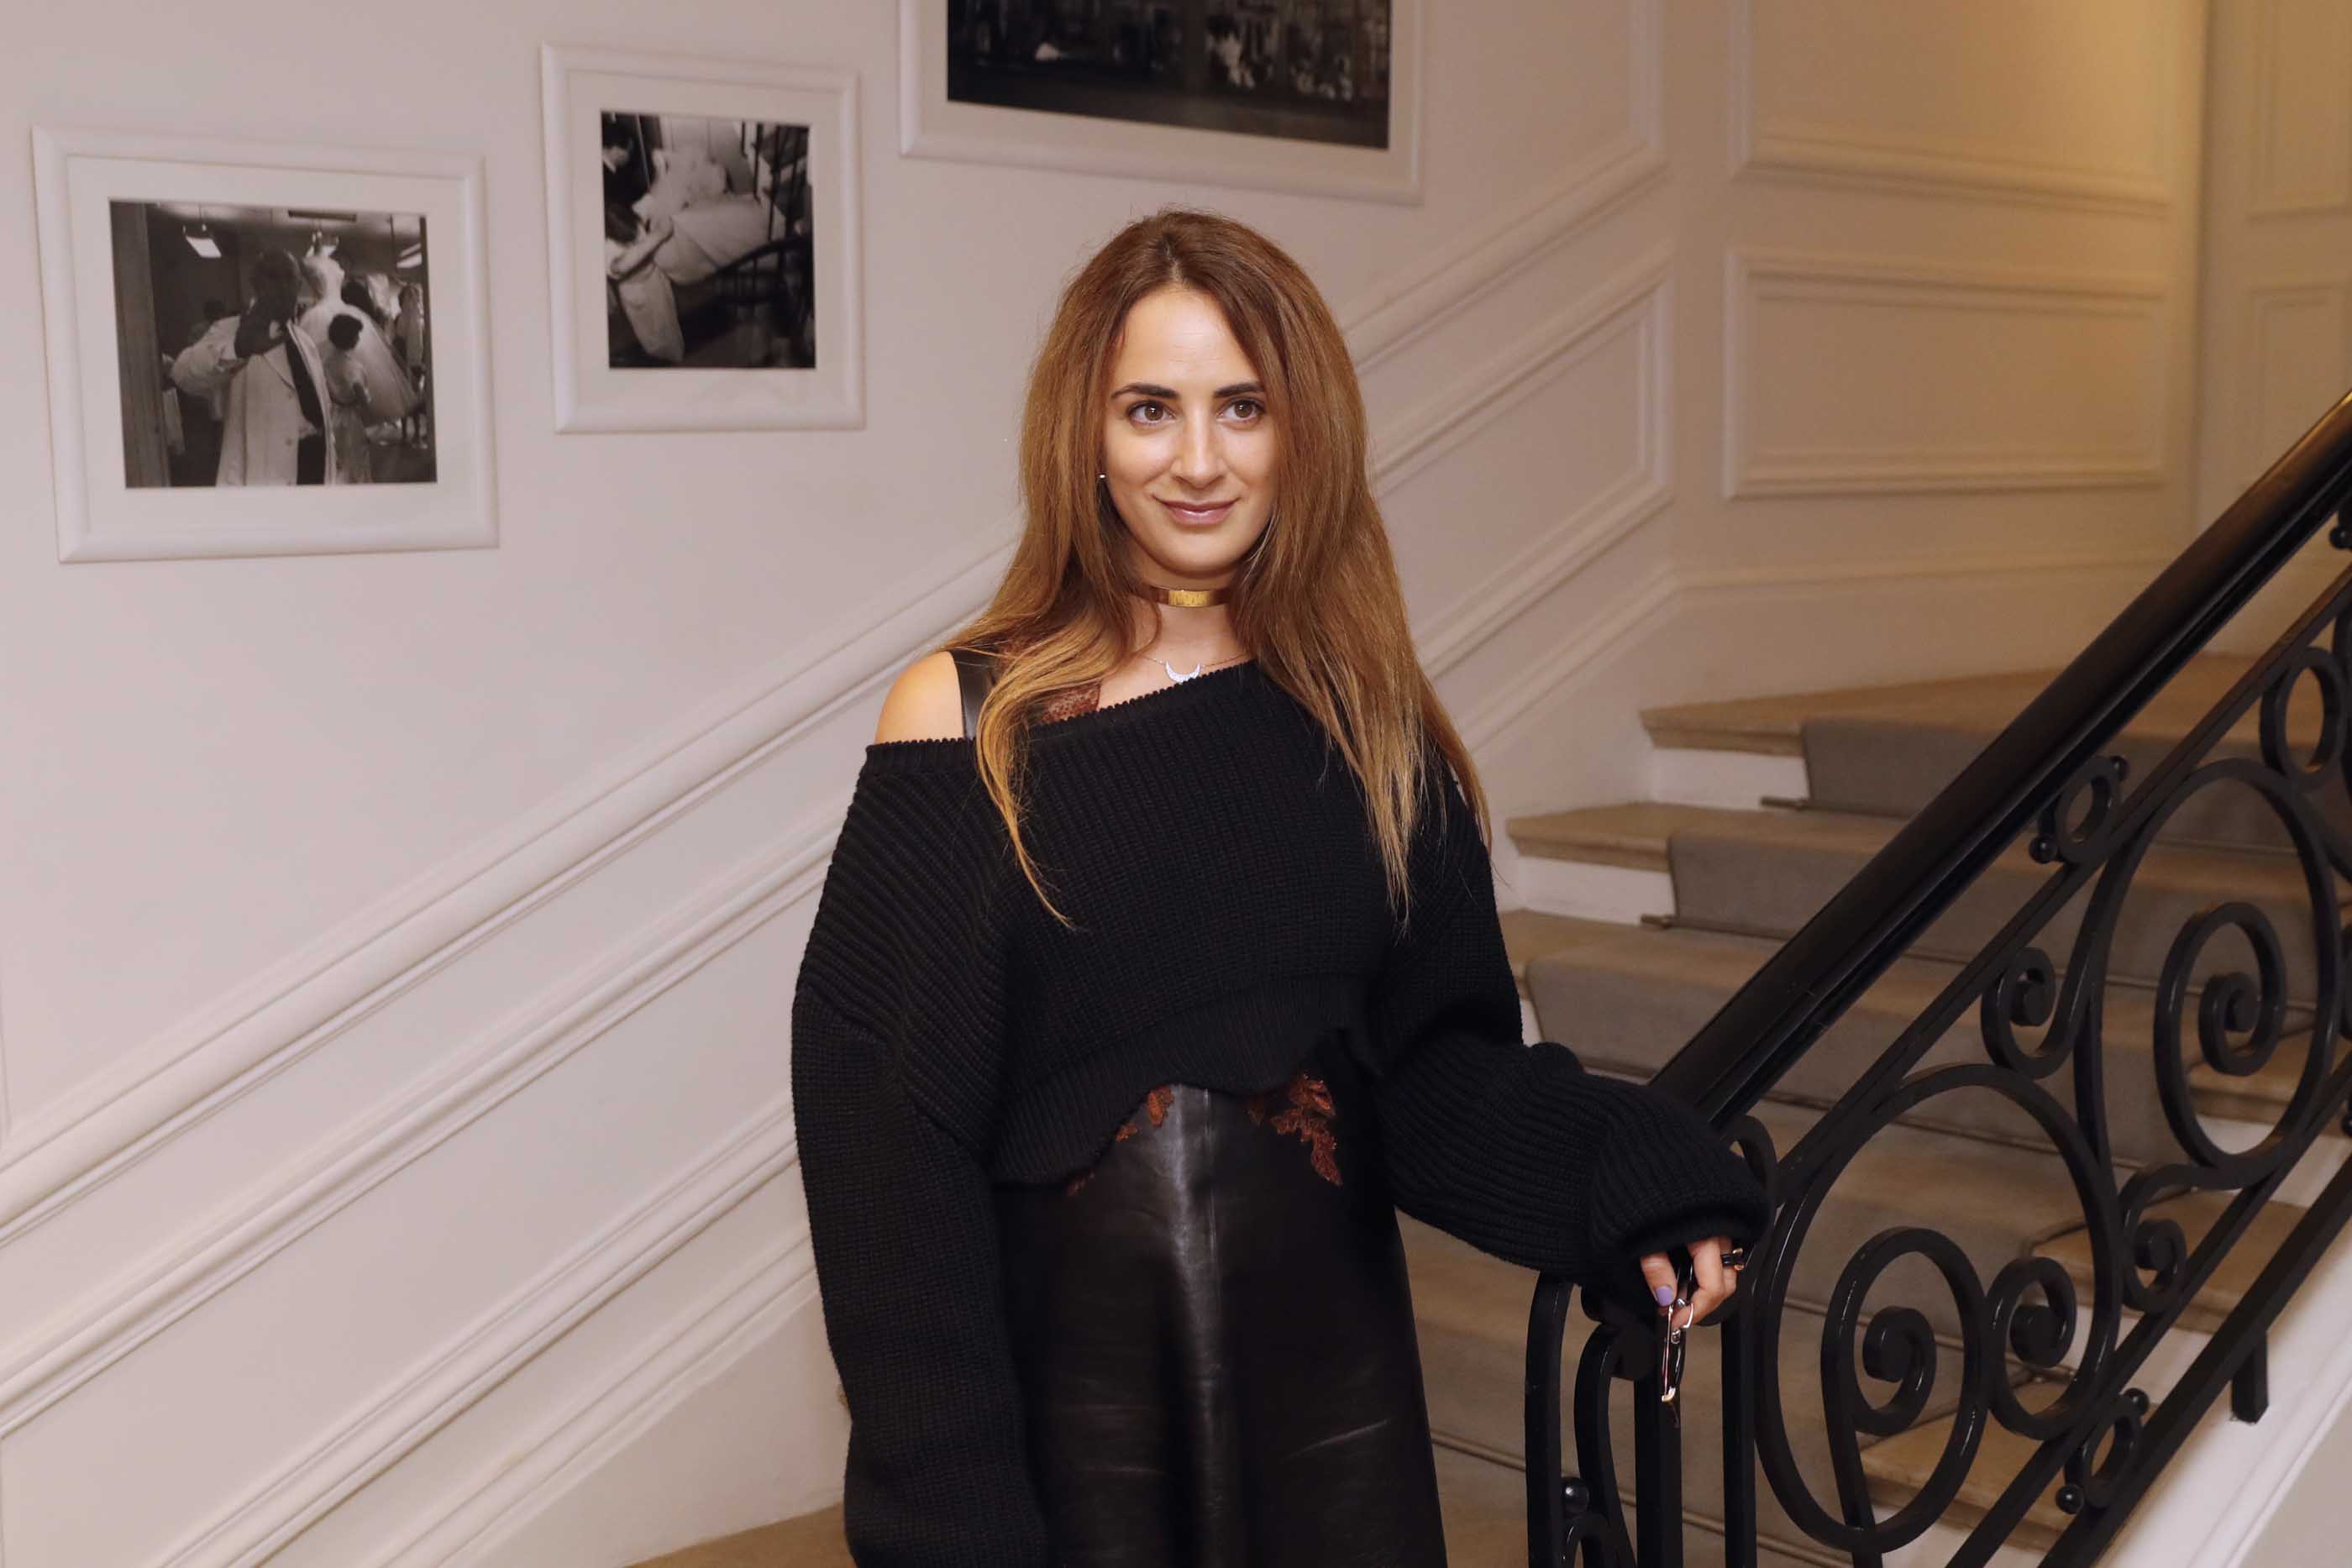 Alexia Niedzielski attends the Christian Dior Haute Couture FW show